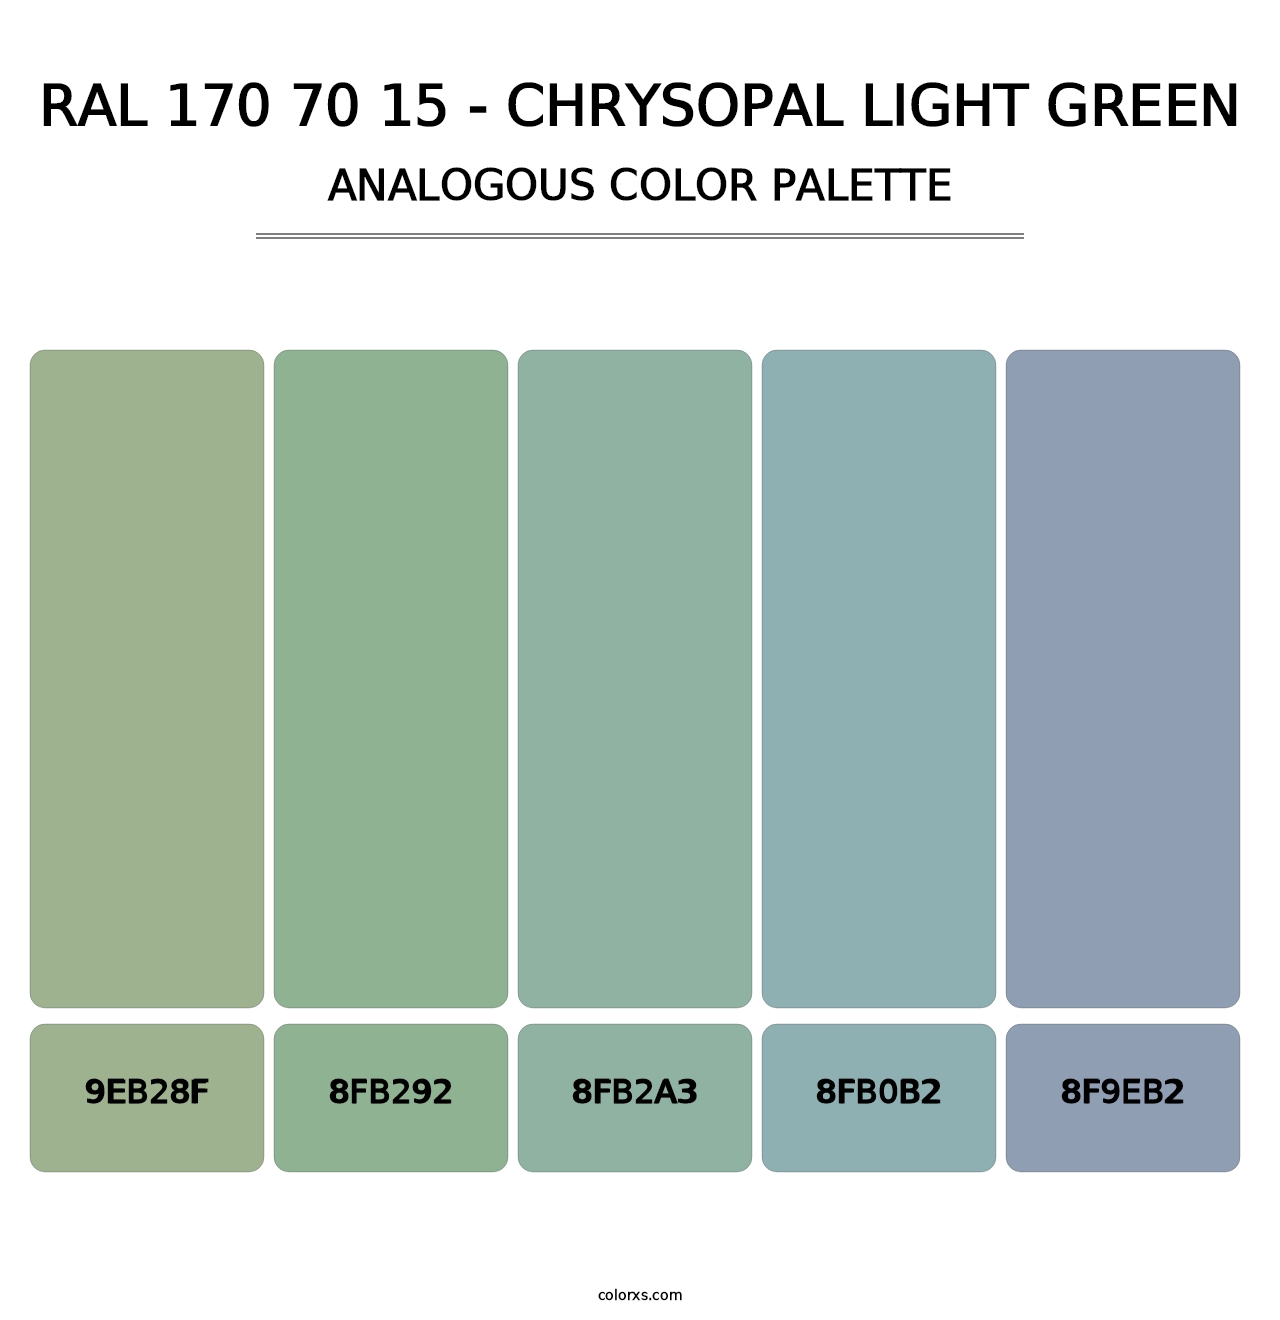 RAL 170 70 15 - Chrysopal Light Green - Analogous Color Palette